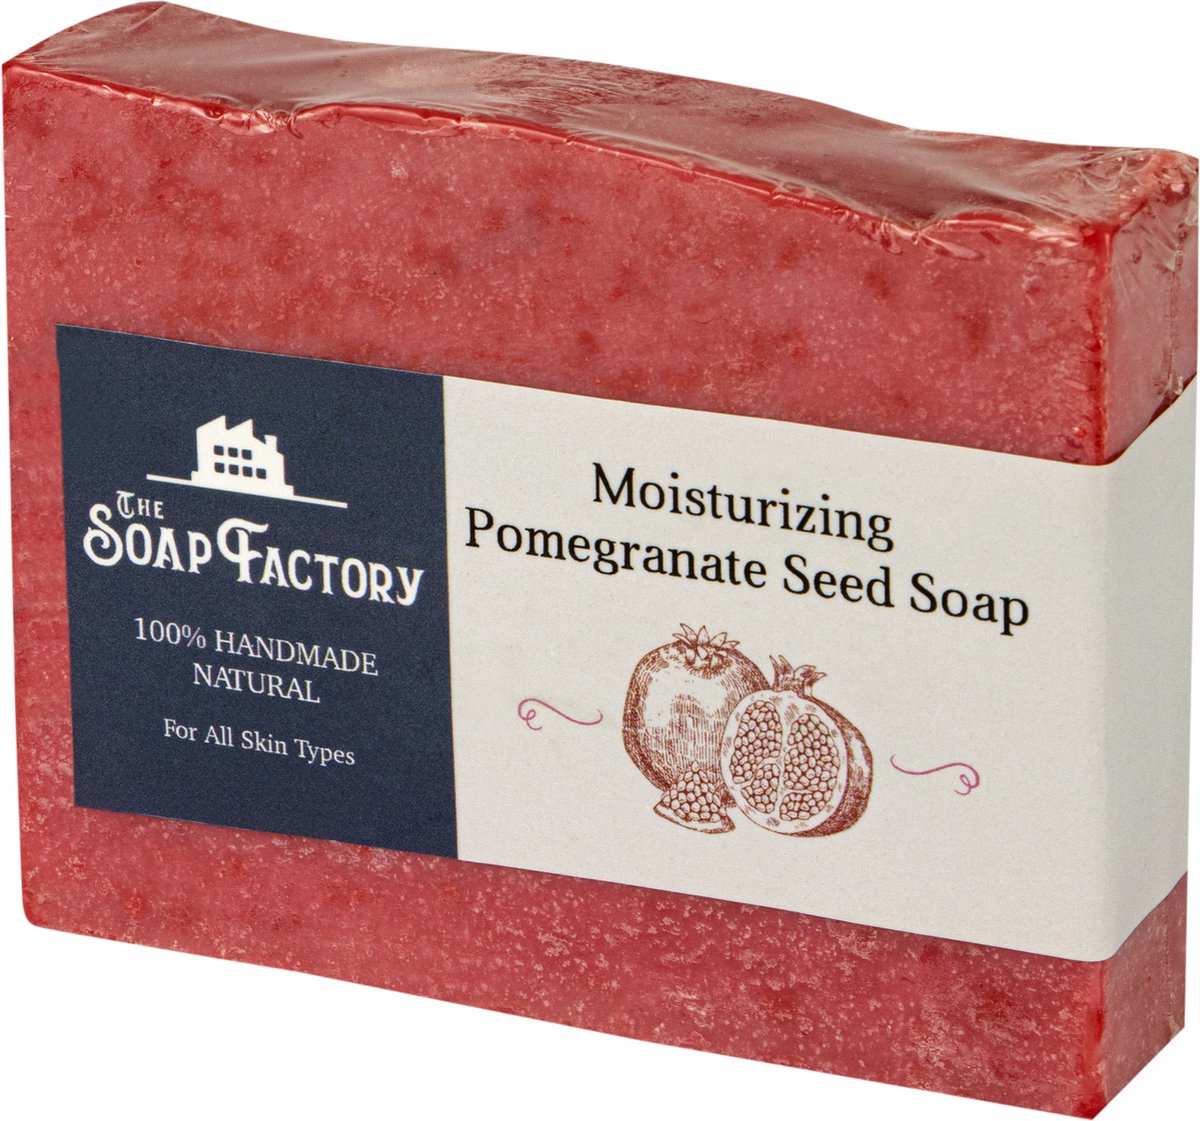 The Soap Factory Moisturizing Pomegranate seed Soap